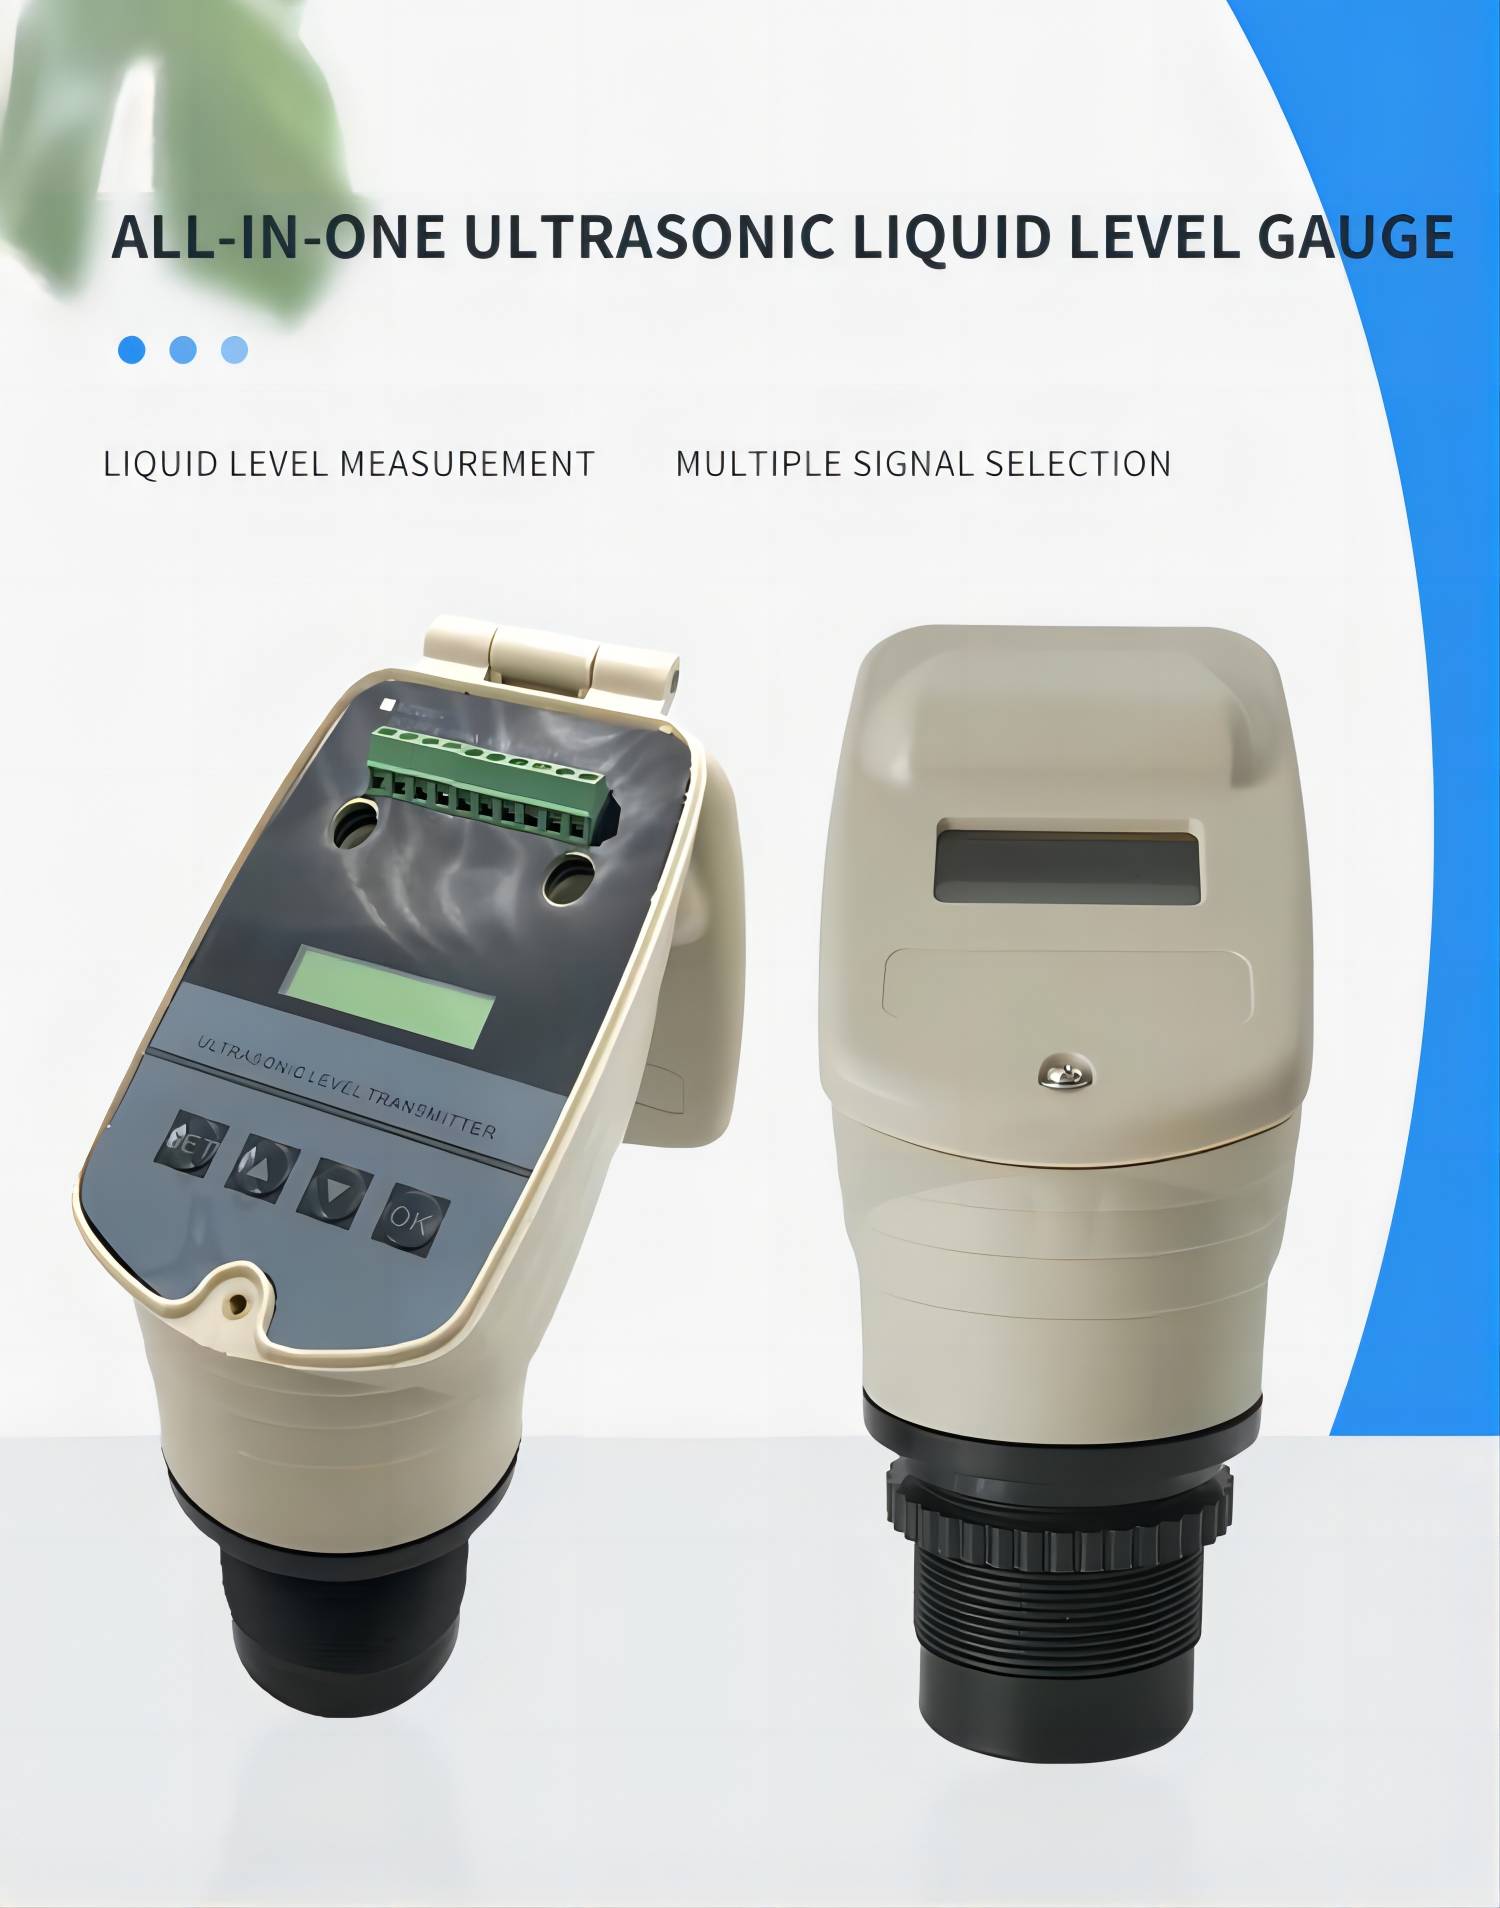 Water Level Ultrasonic Sensor illustrate